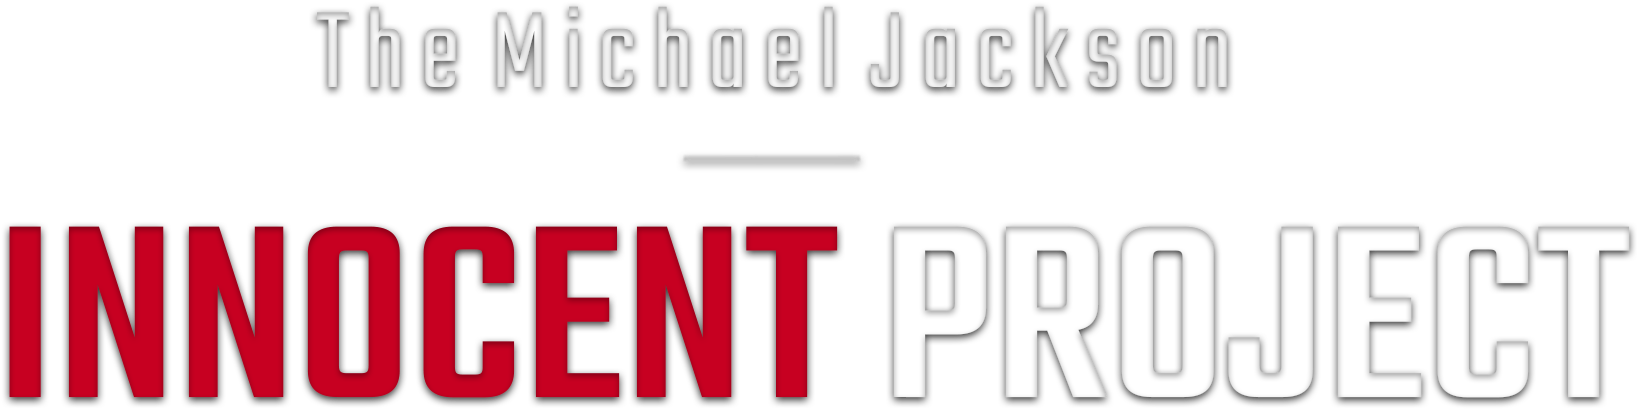 Michael Jackson Innocent Project Logo PNG image